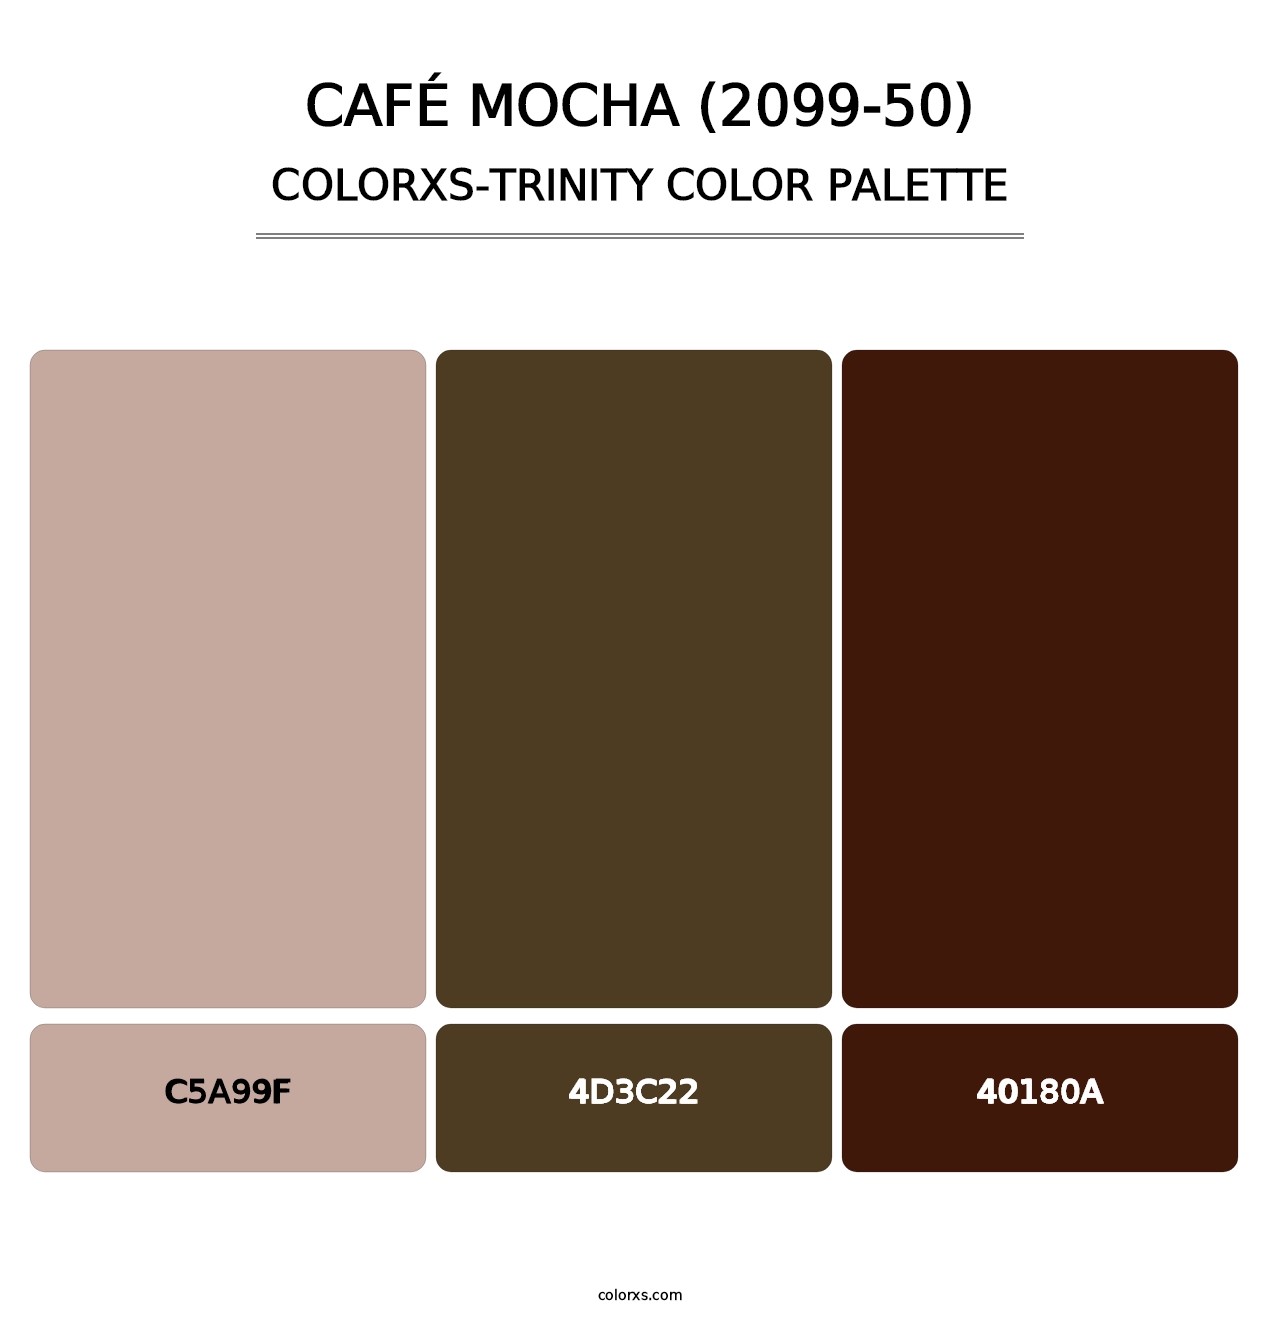 Café Mocha (2099-50) - Colorxs Trinity Palette